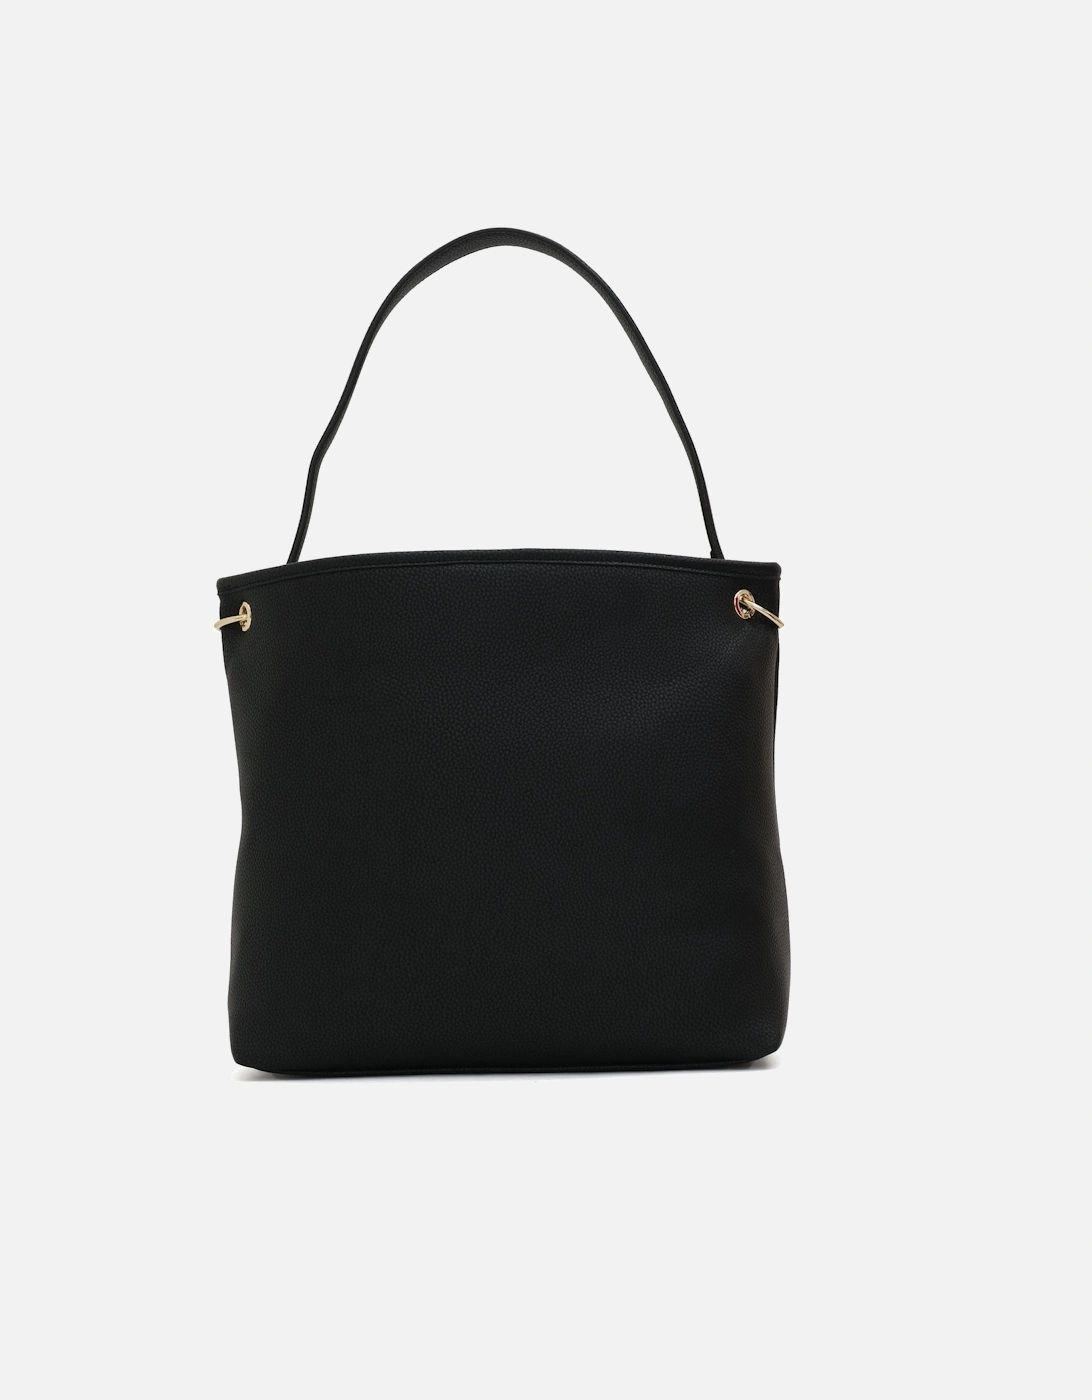 Brixton Black Shopper Bag